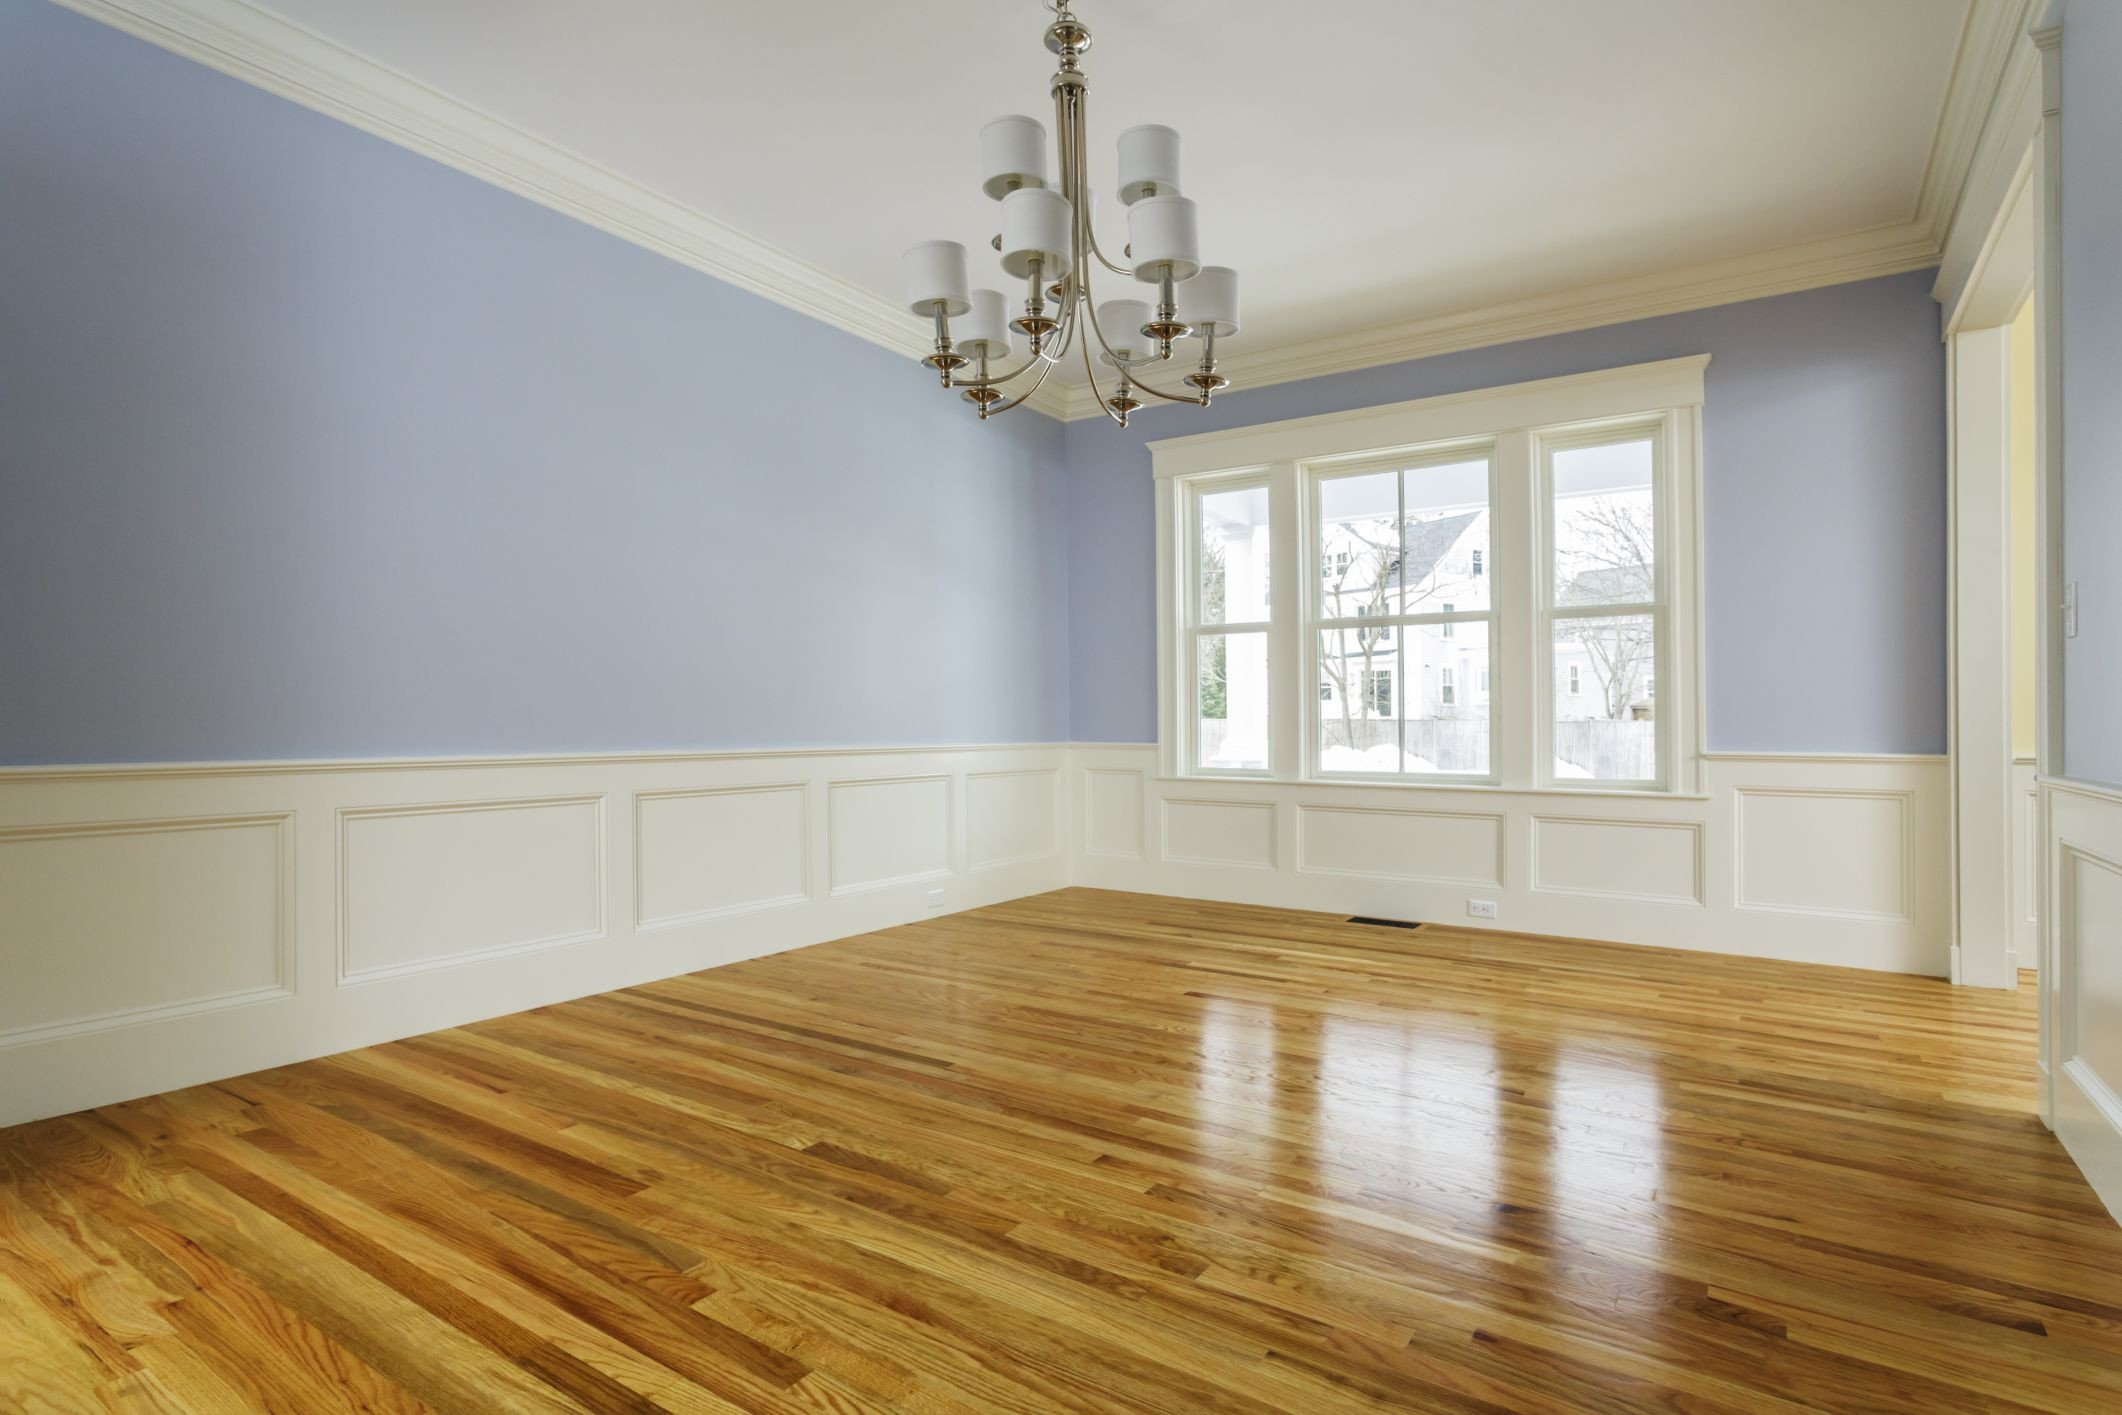 resurfacing prefinished hardwood floors of the cost to refinish hardwood floors in 168686572 highres 56a2fd773df78cf7727b6cb3